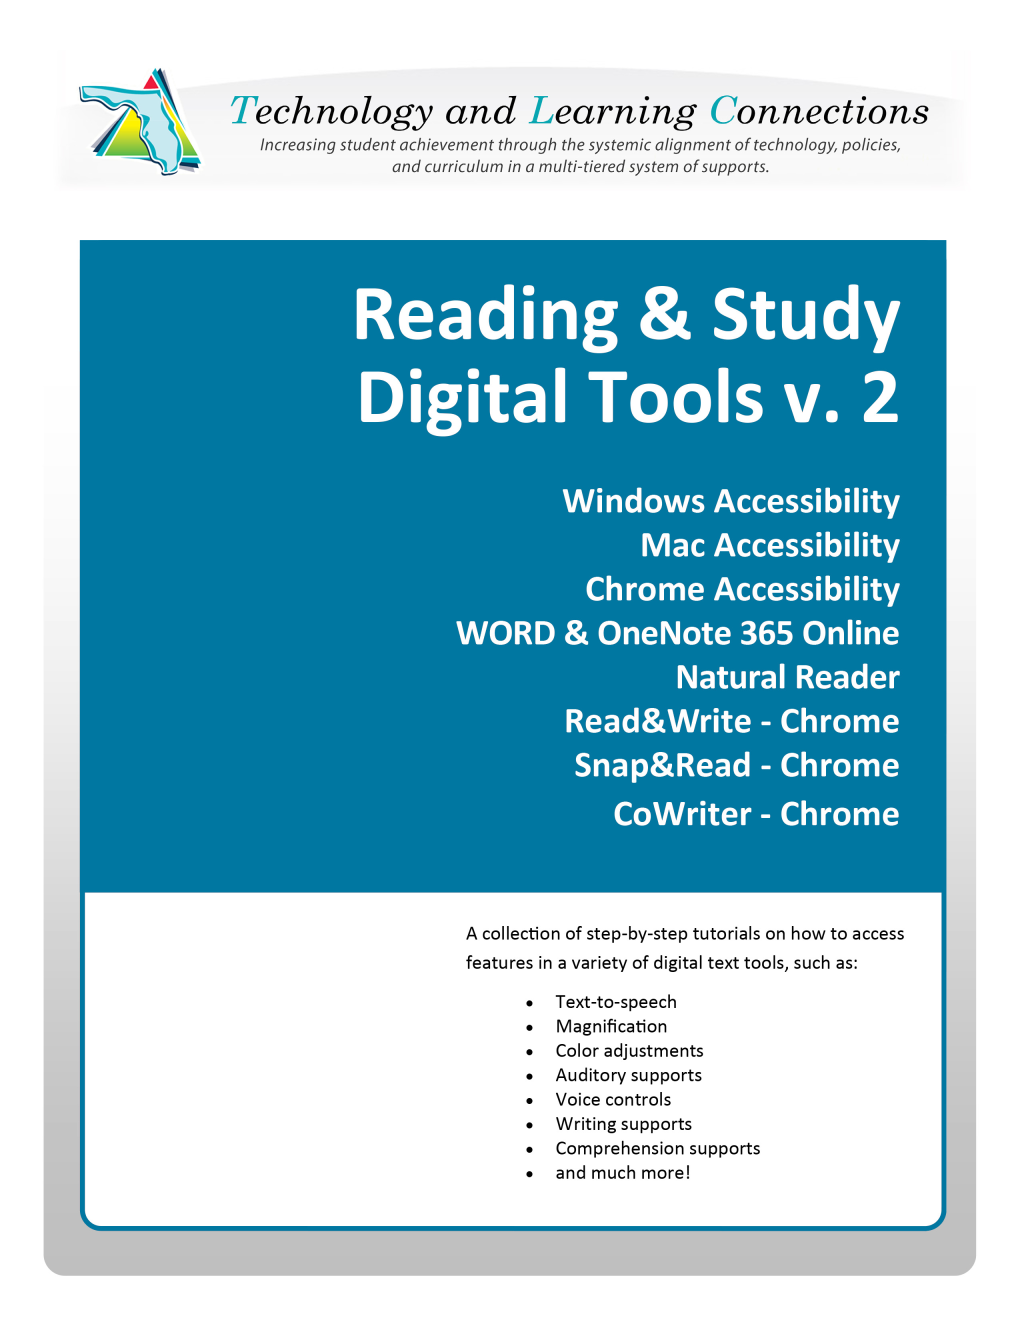 Reading & Study Digital Tools